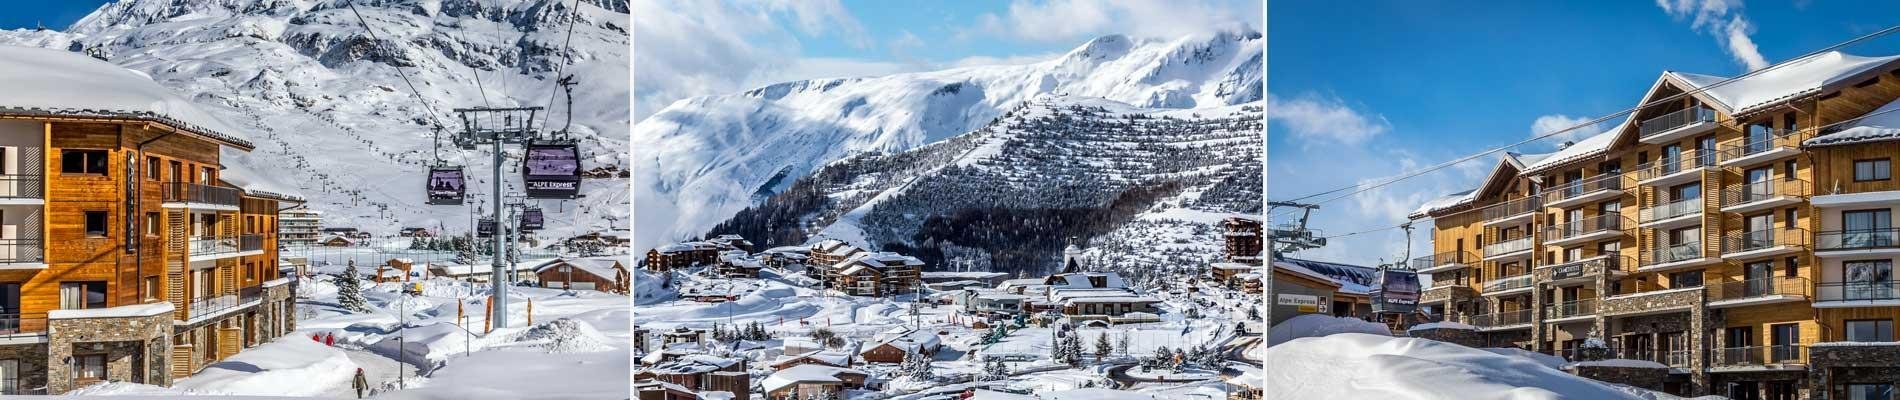 DARIA-I-NOR alpe d huez lodge et spa wintersport skivakantie